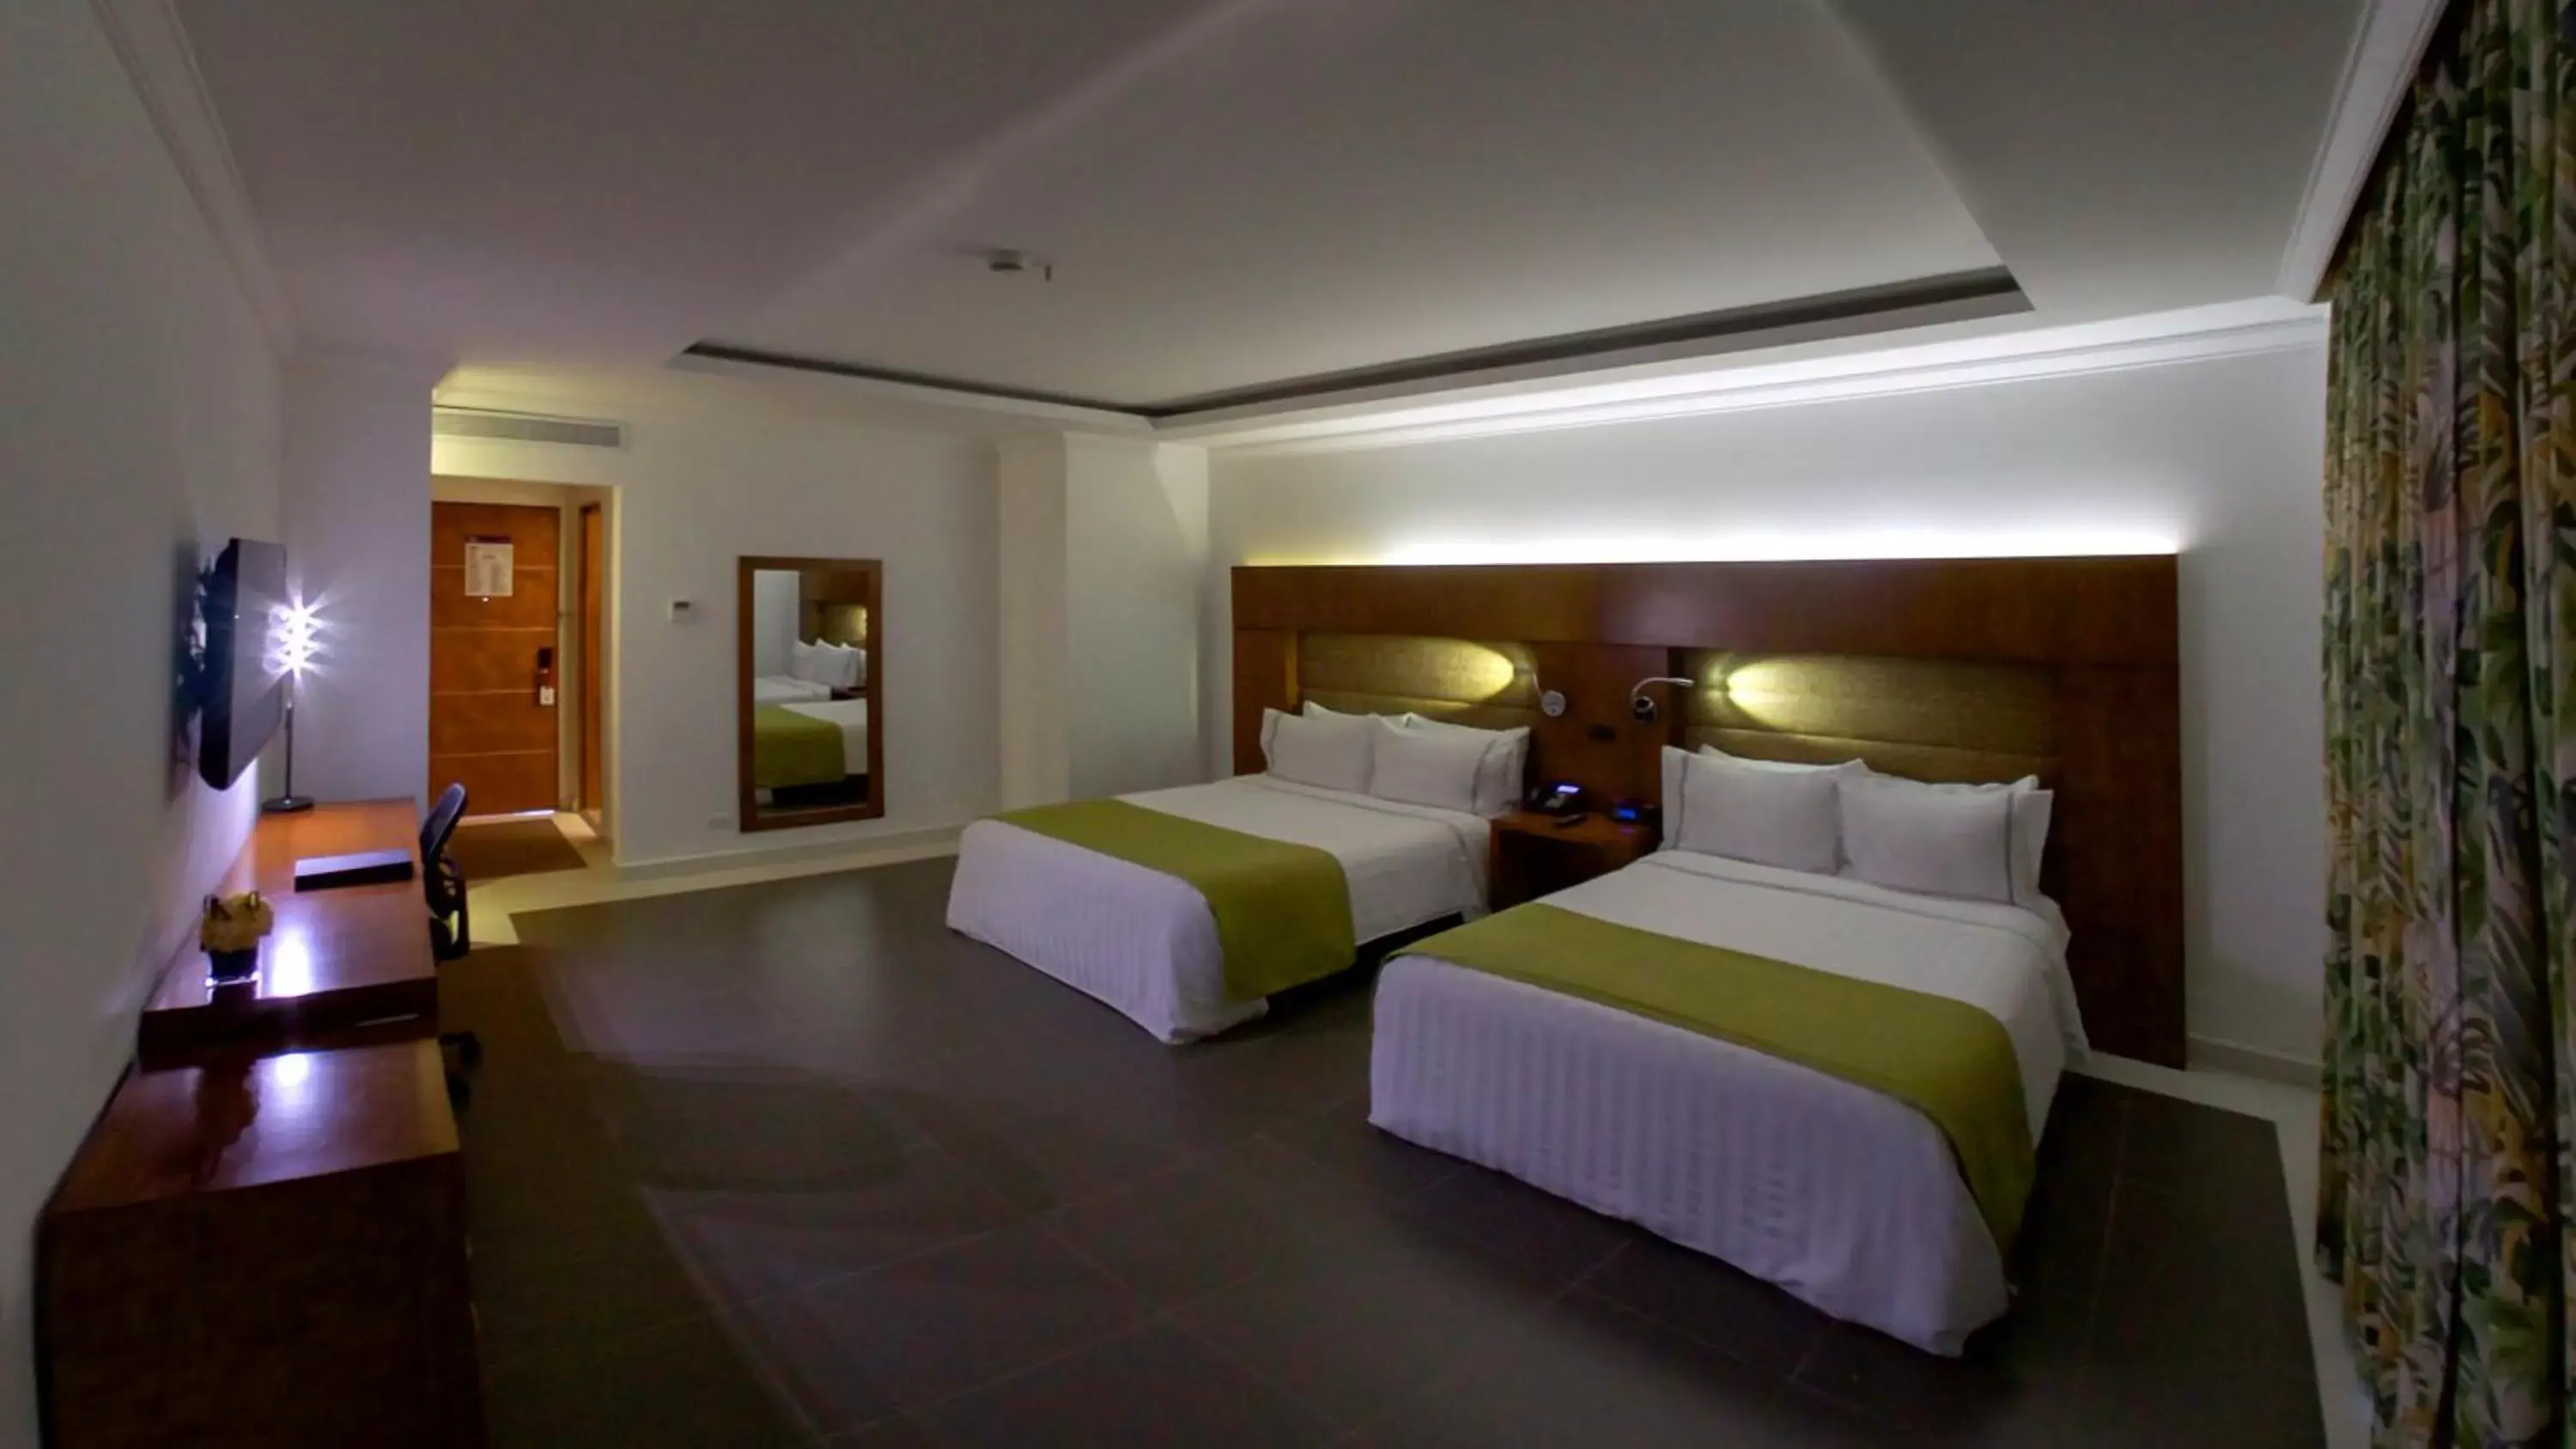 Bed, Room Photo in GHL Hotel Grand Villavicencio